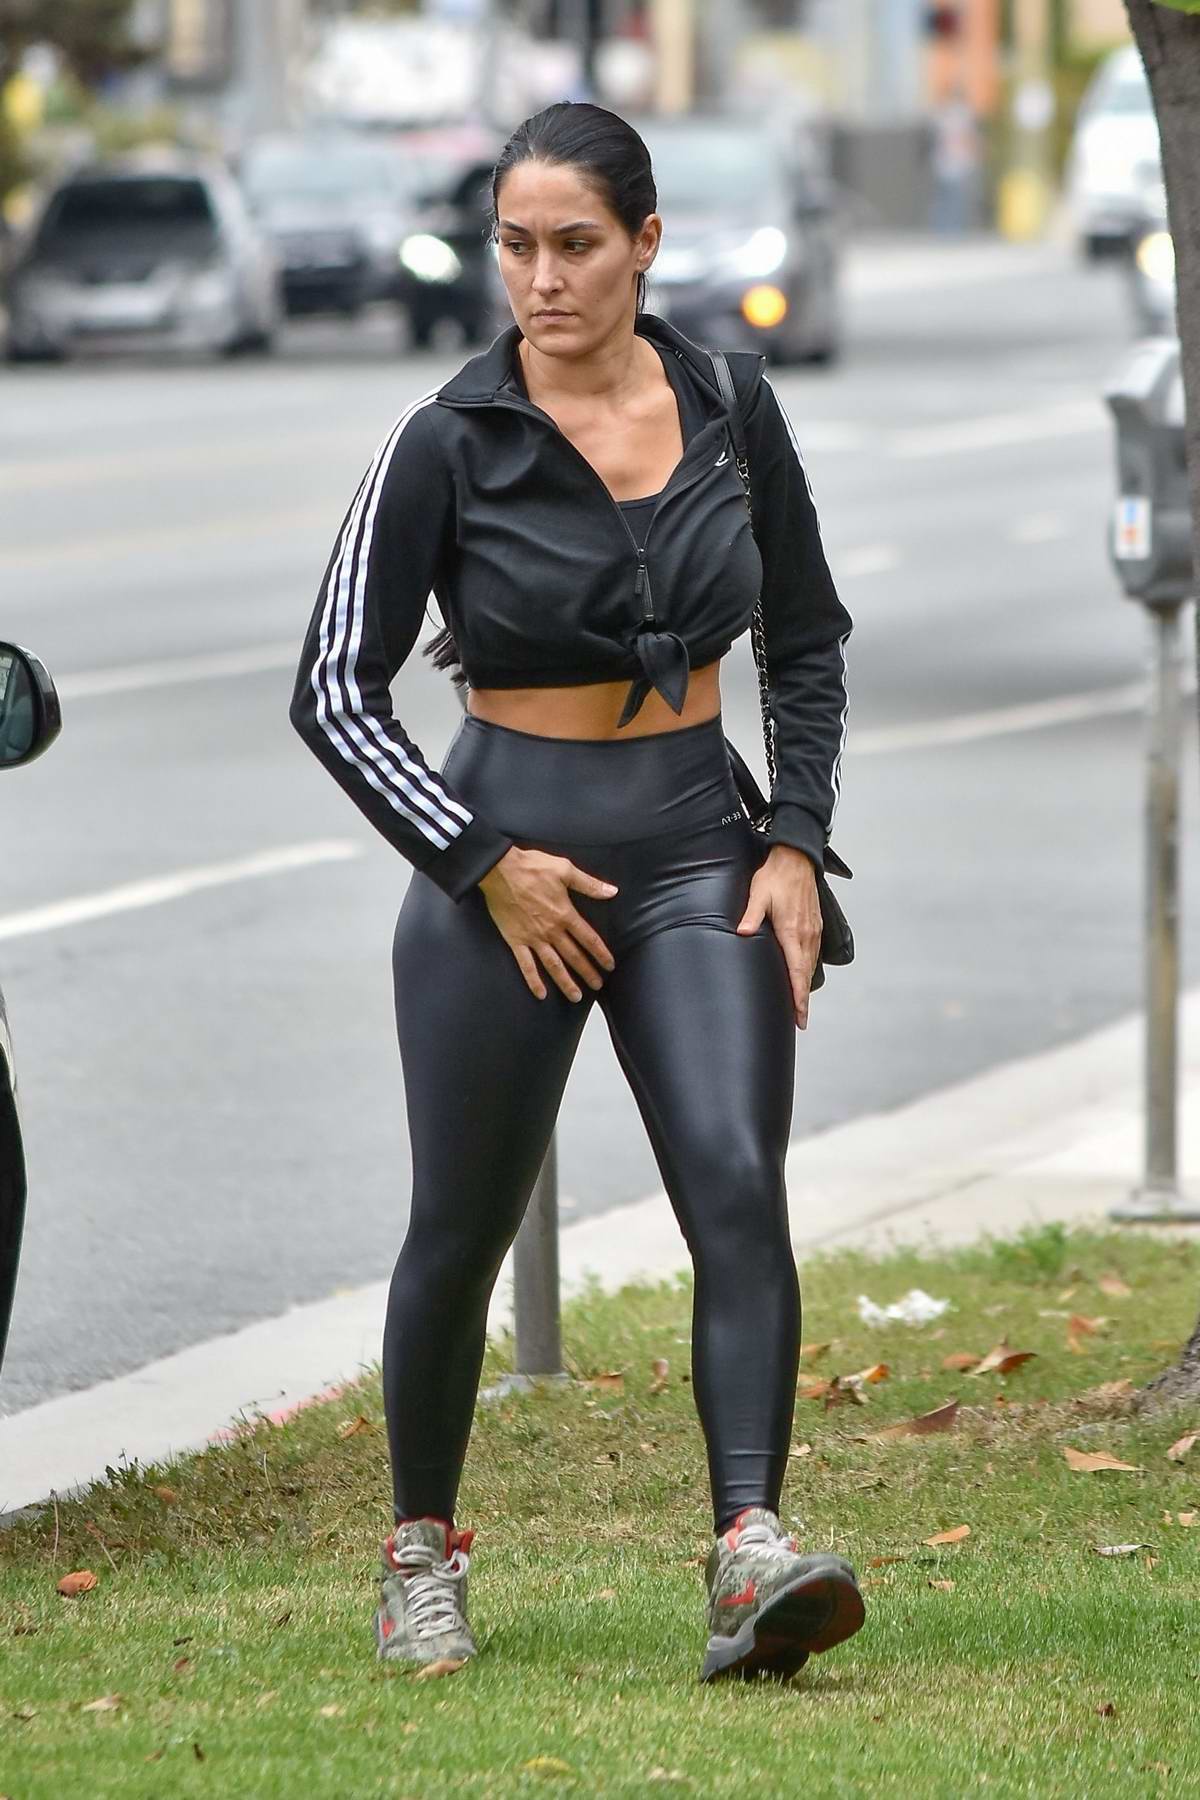 nikki bella shows off her fit physique in black athleisure